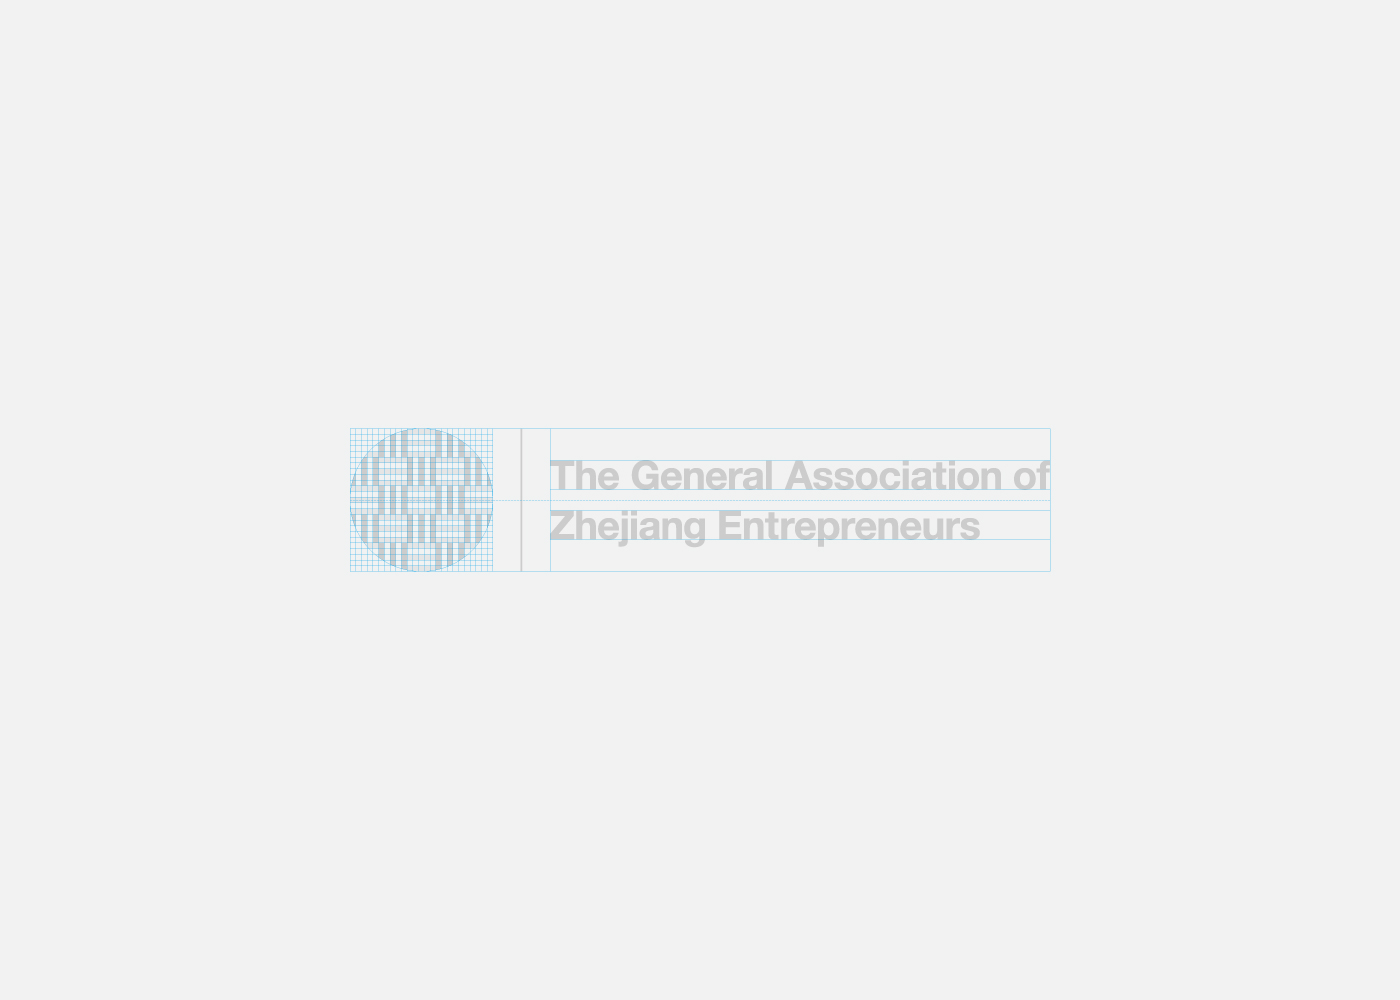 The General Association of Zhejiang Entrepreneurs Logo by Hiromi Maeo